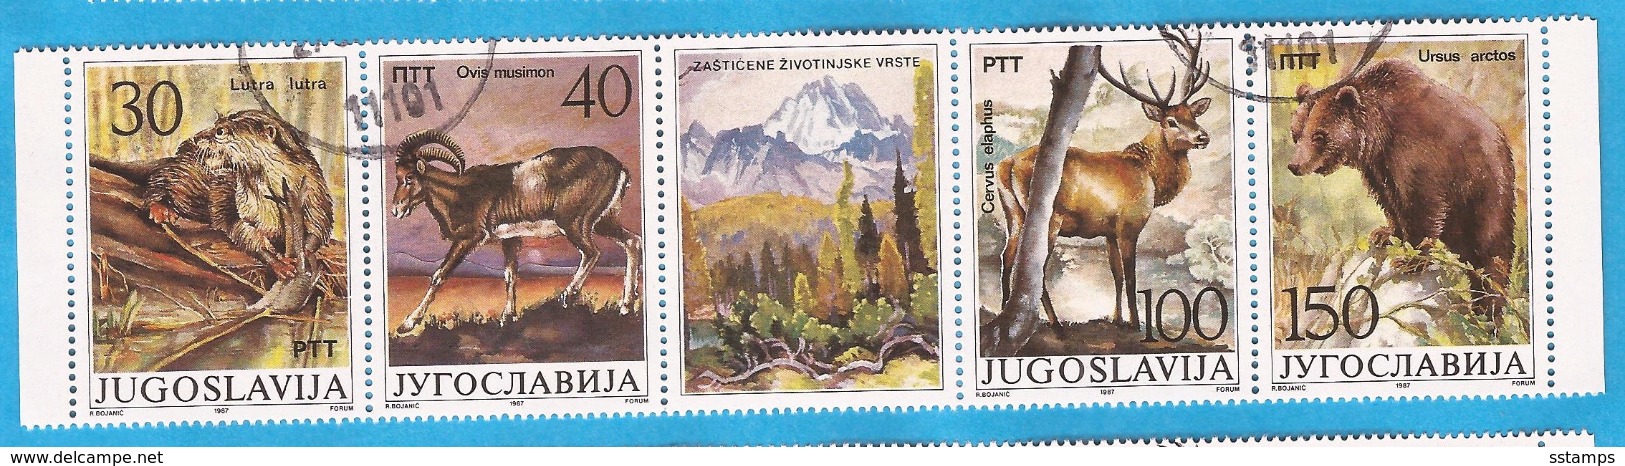 1987  2206-09   WWF  ROTHIRSCH BRAUNBAER MUFFLON FISCHOTTER  JUGOSLAVIJA JUGOSLAWIEN   USED - Used Stamps